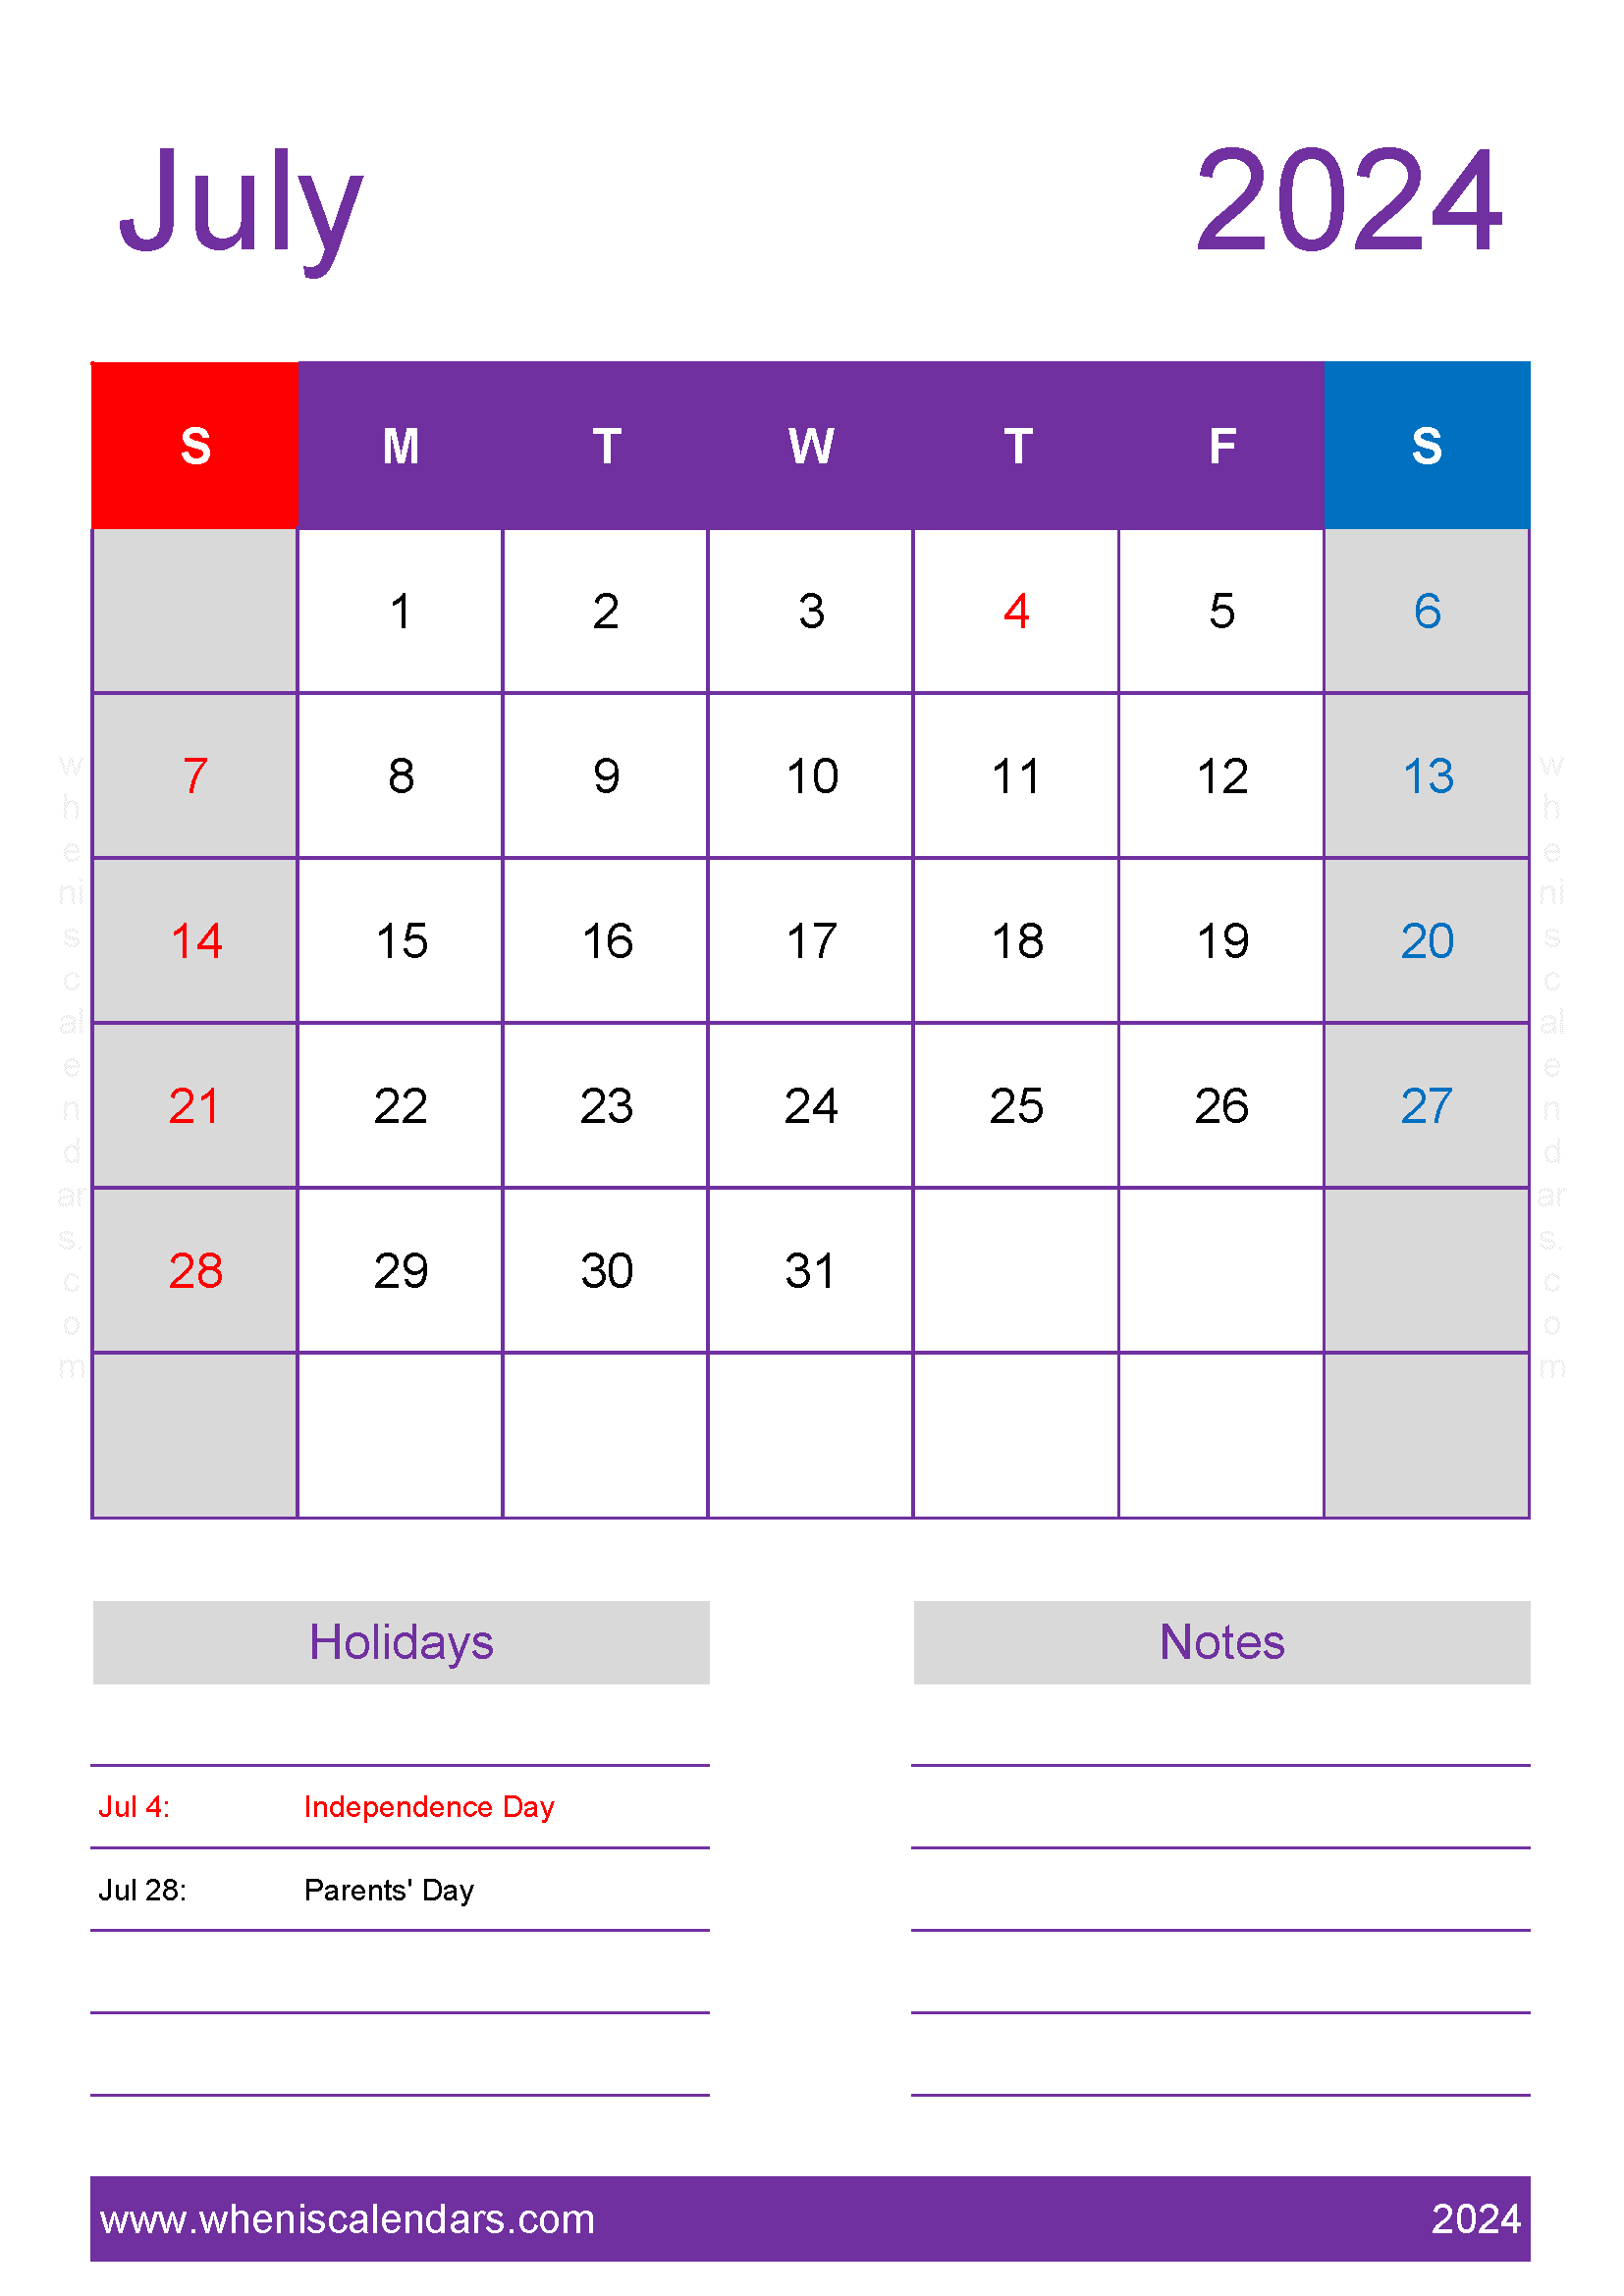 July 2024 Calendar in excel Monthly Calendar